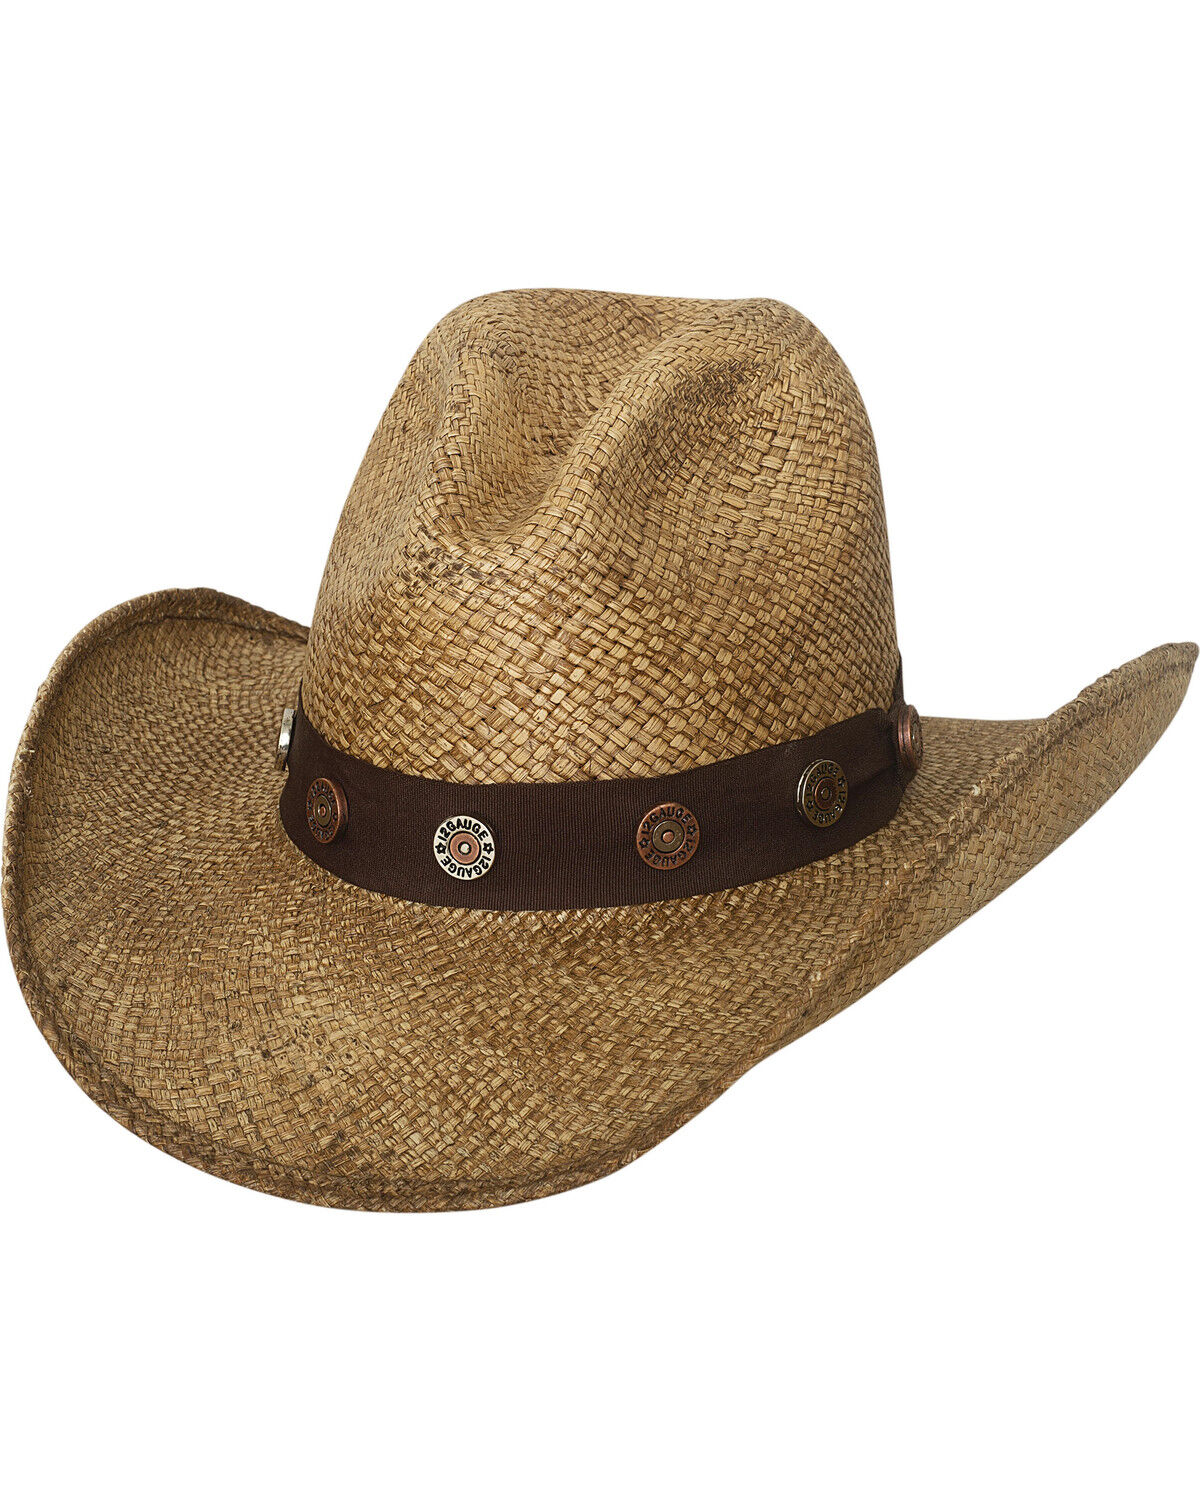 New Bullhide Hats Back Roads 6X Premium Wool Felt Western Cowboy Hat 